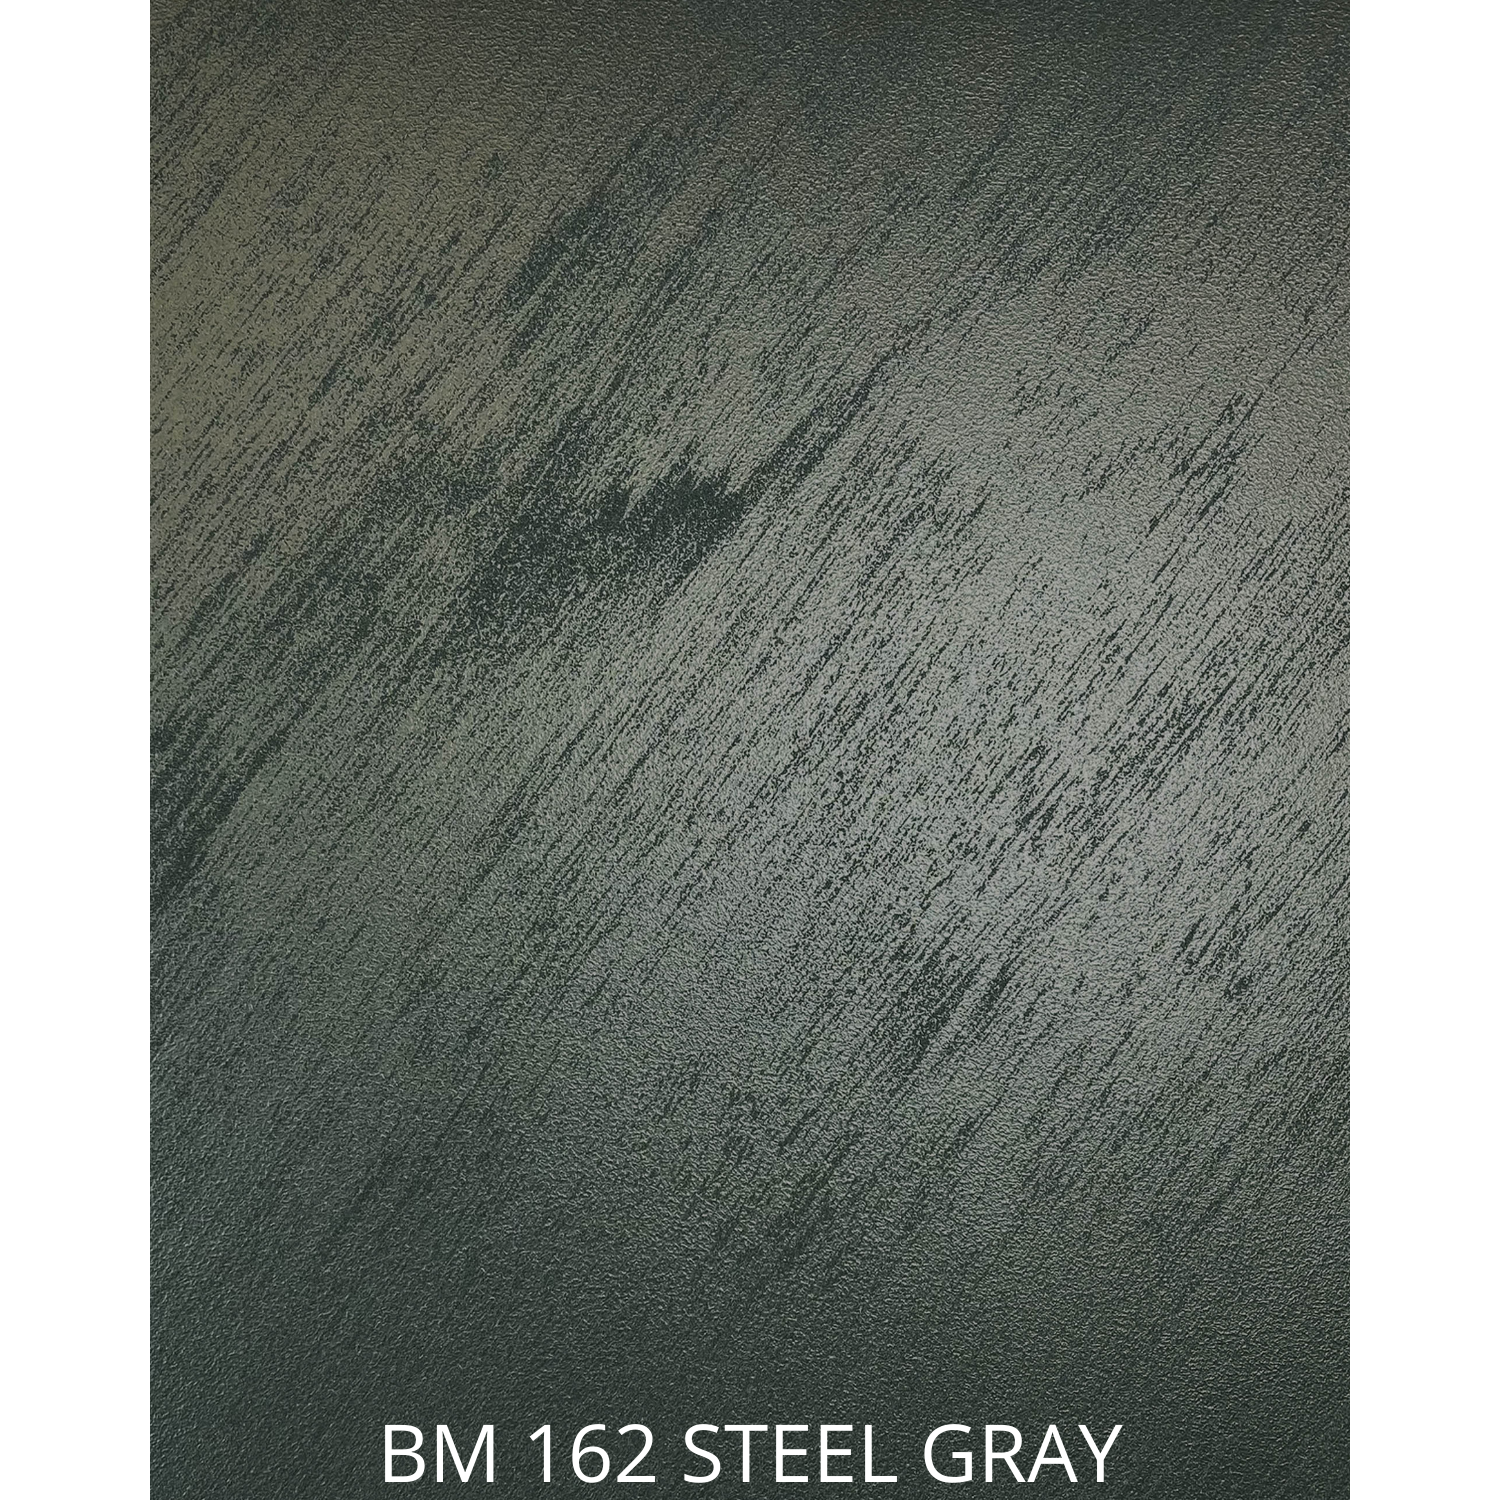 BM 162 STEEL GRAY